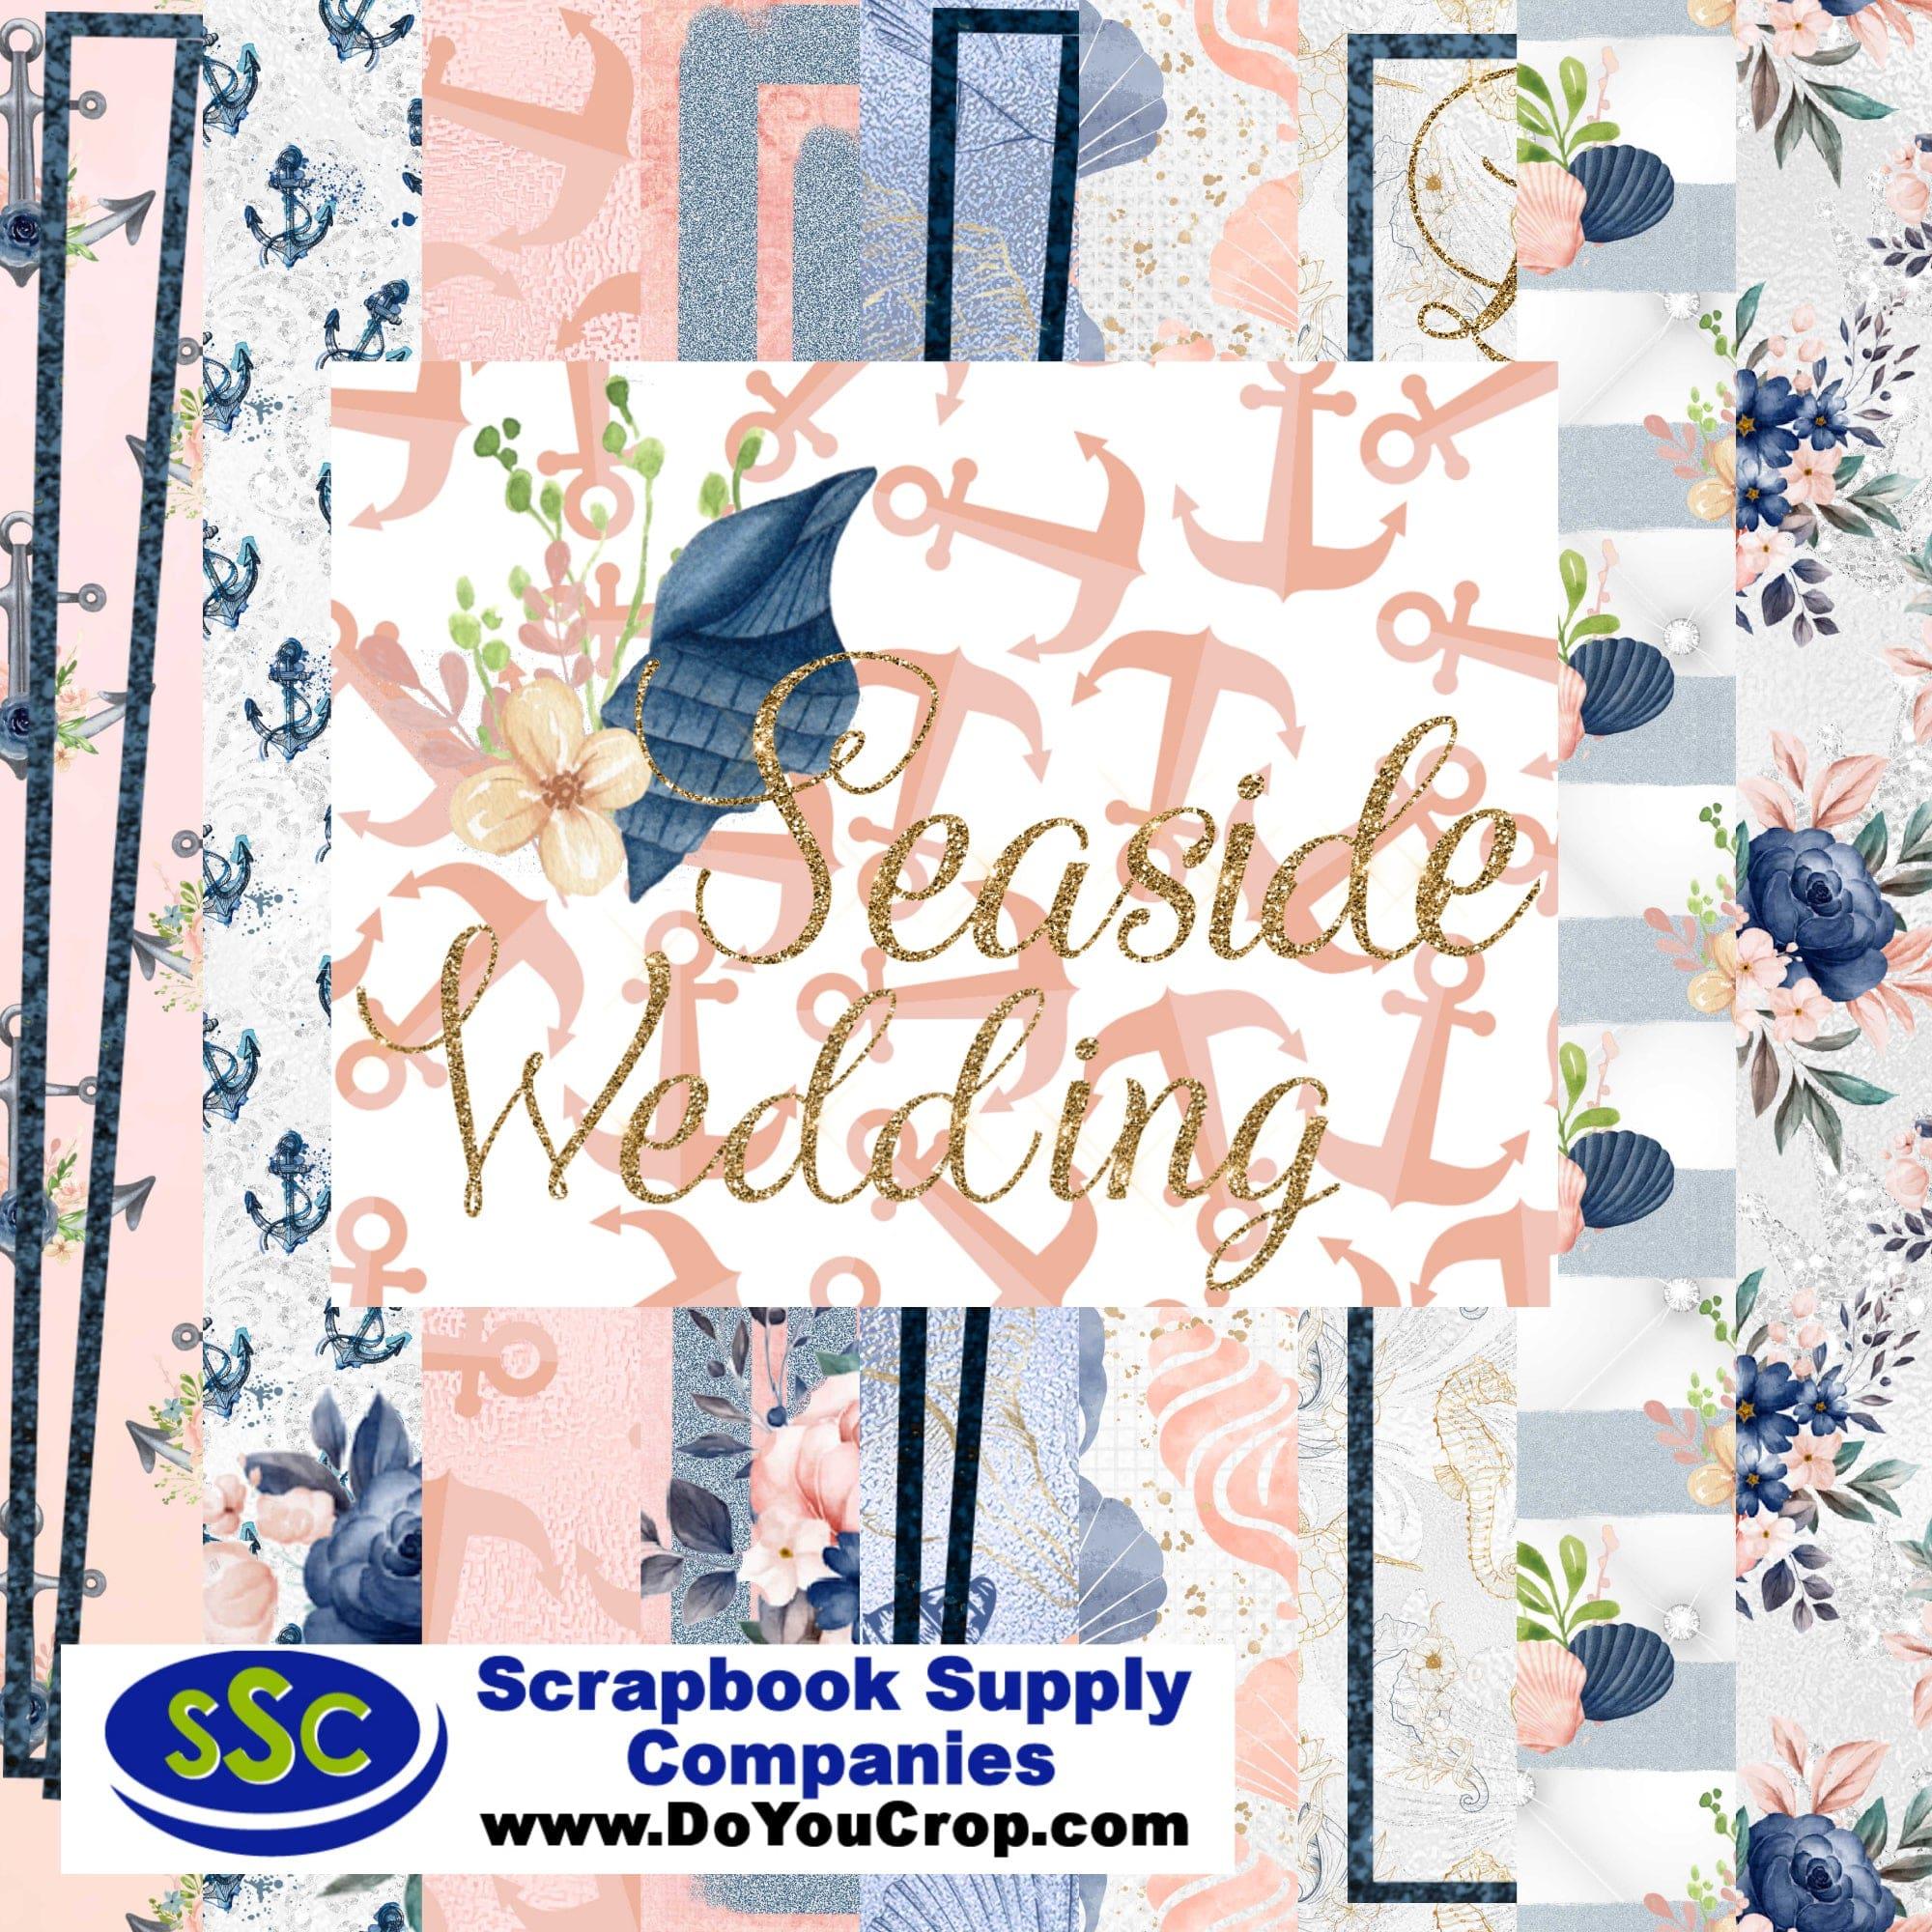 Seaside Wedding 12 x 12 Scrapbook Paper & Embellishment Kit by SSC Designs - Scrapbook Supply Companies